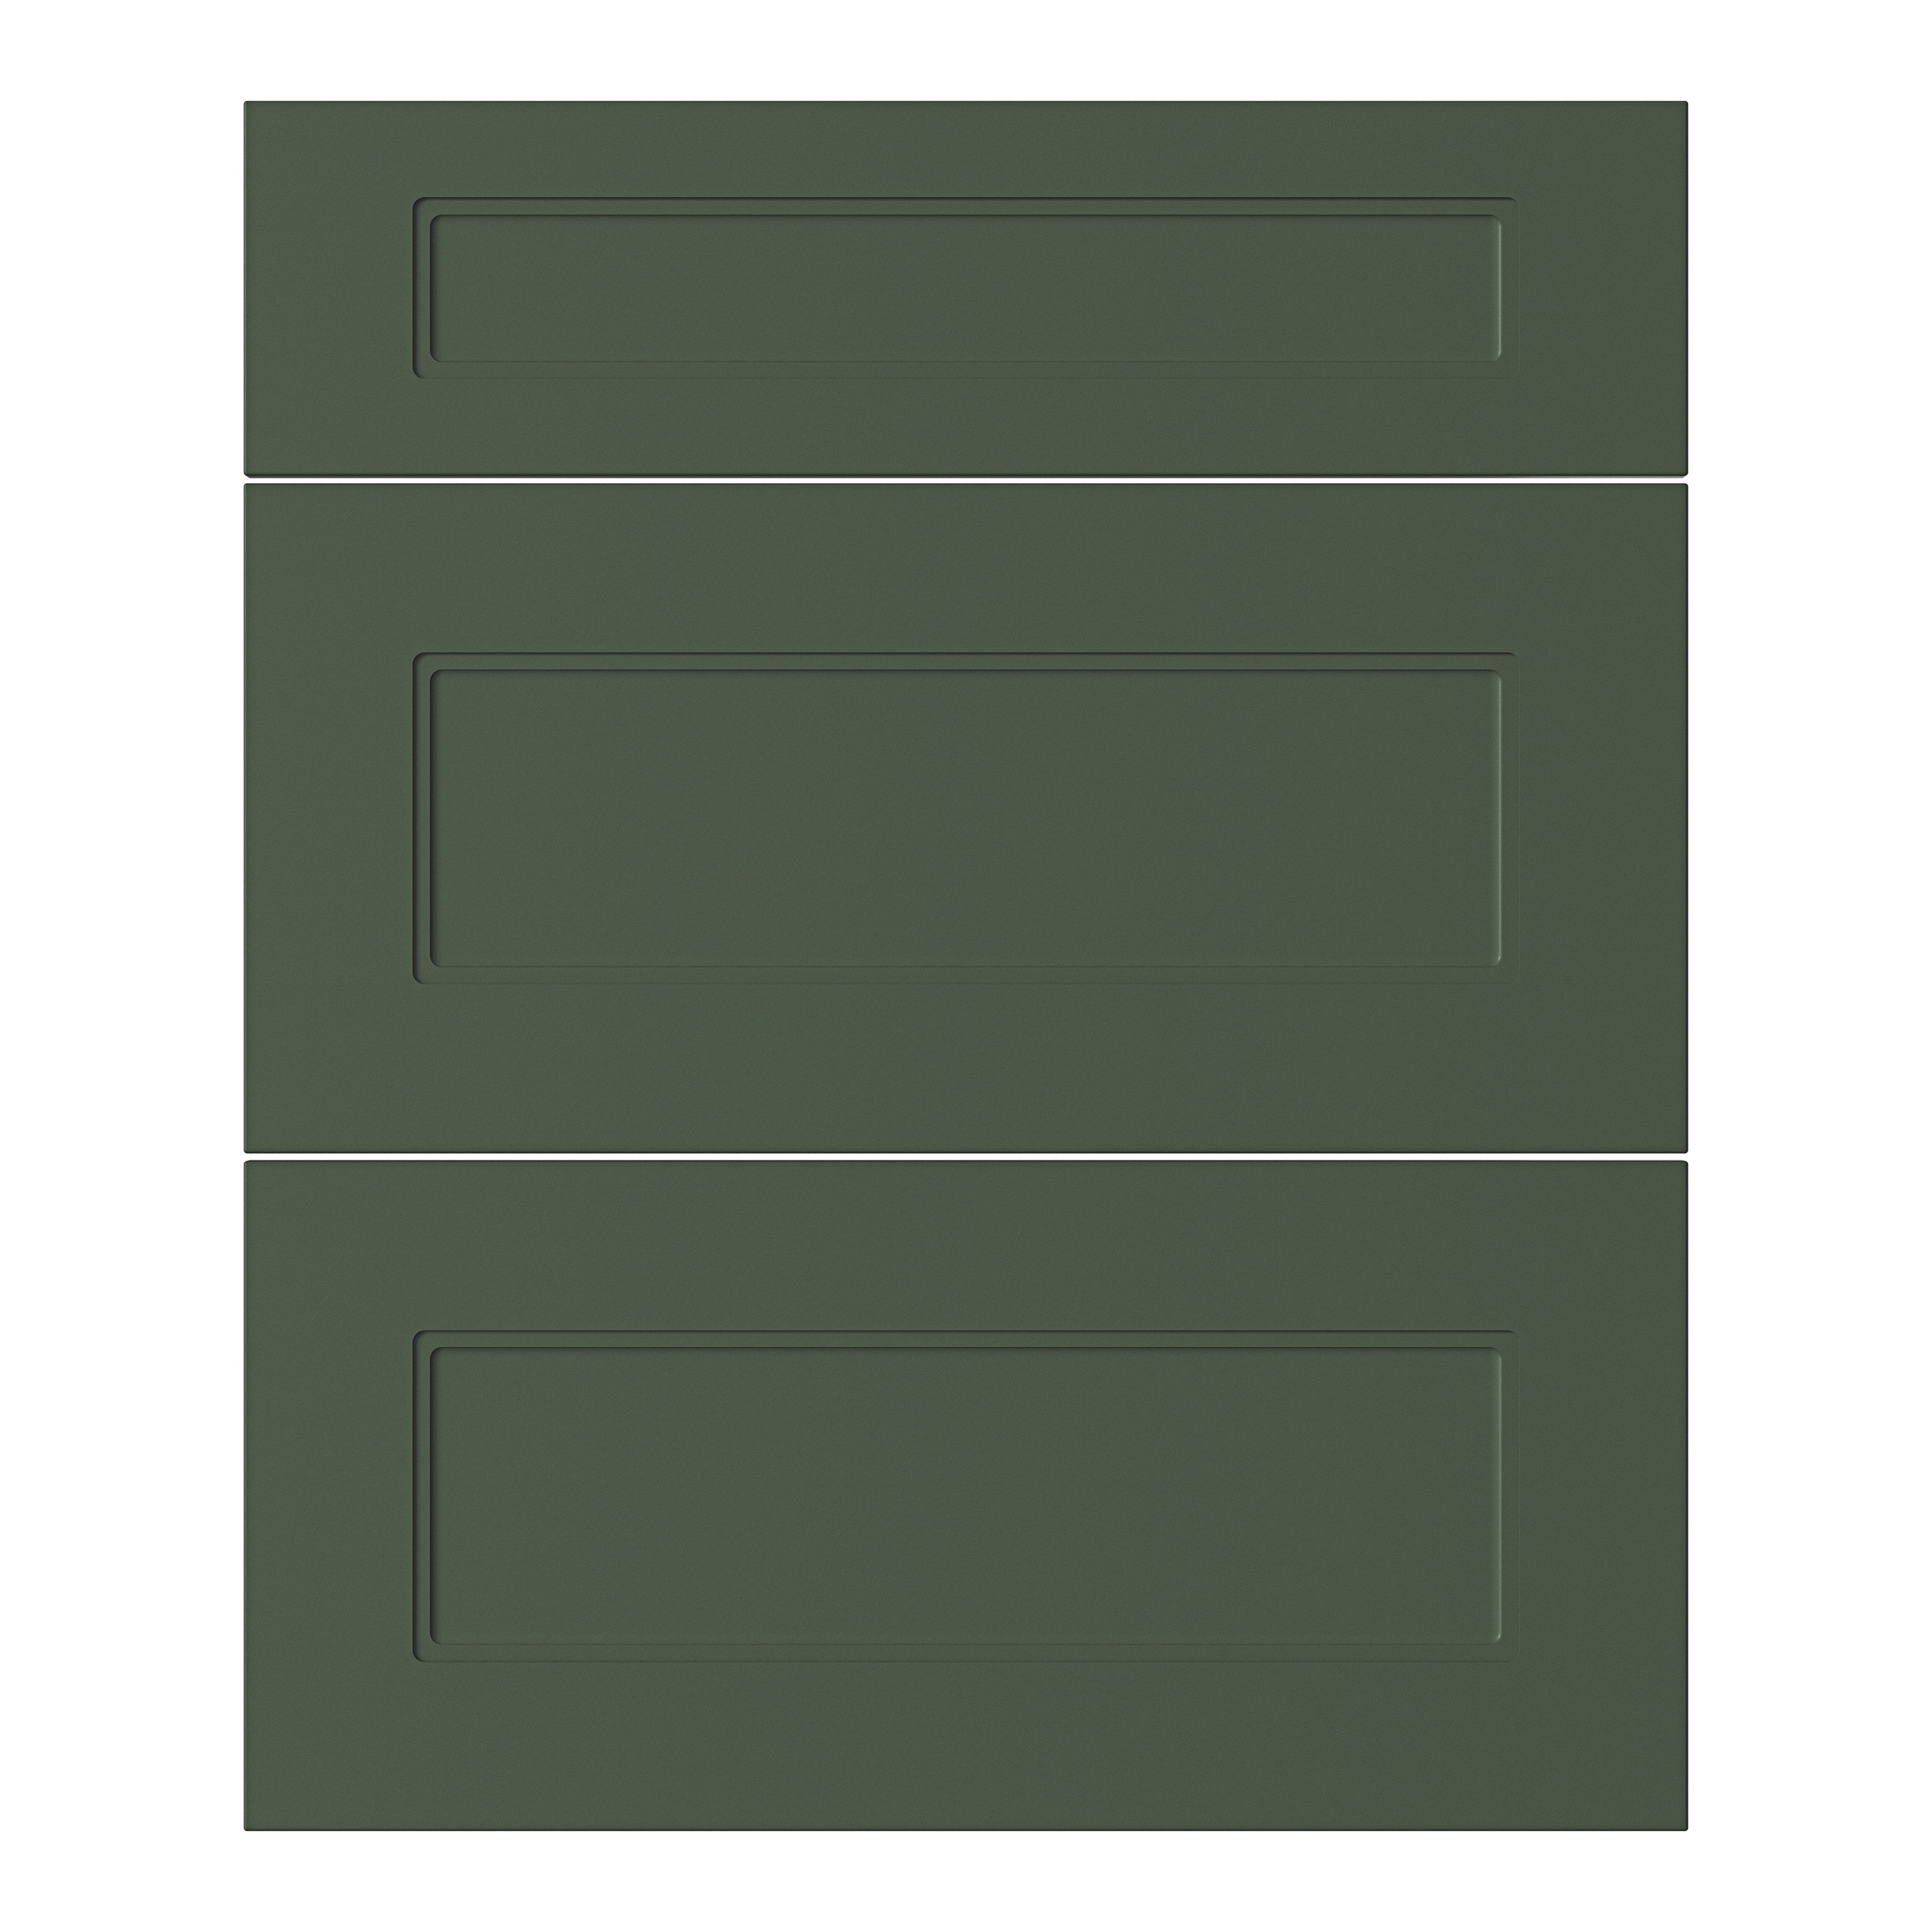 GoodHome Artemisia Matt dark green shaker Drawer front (W)600mm, Pack of 3